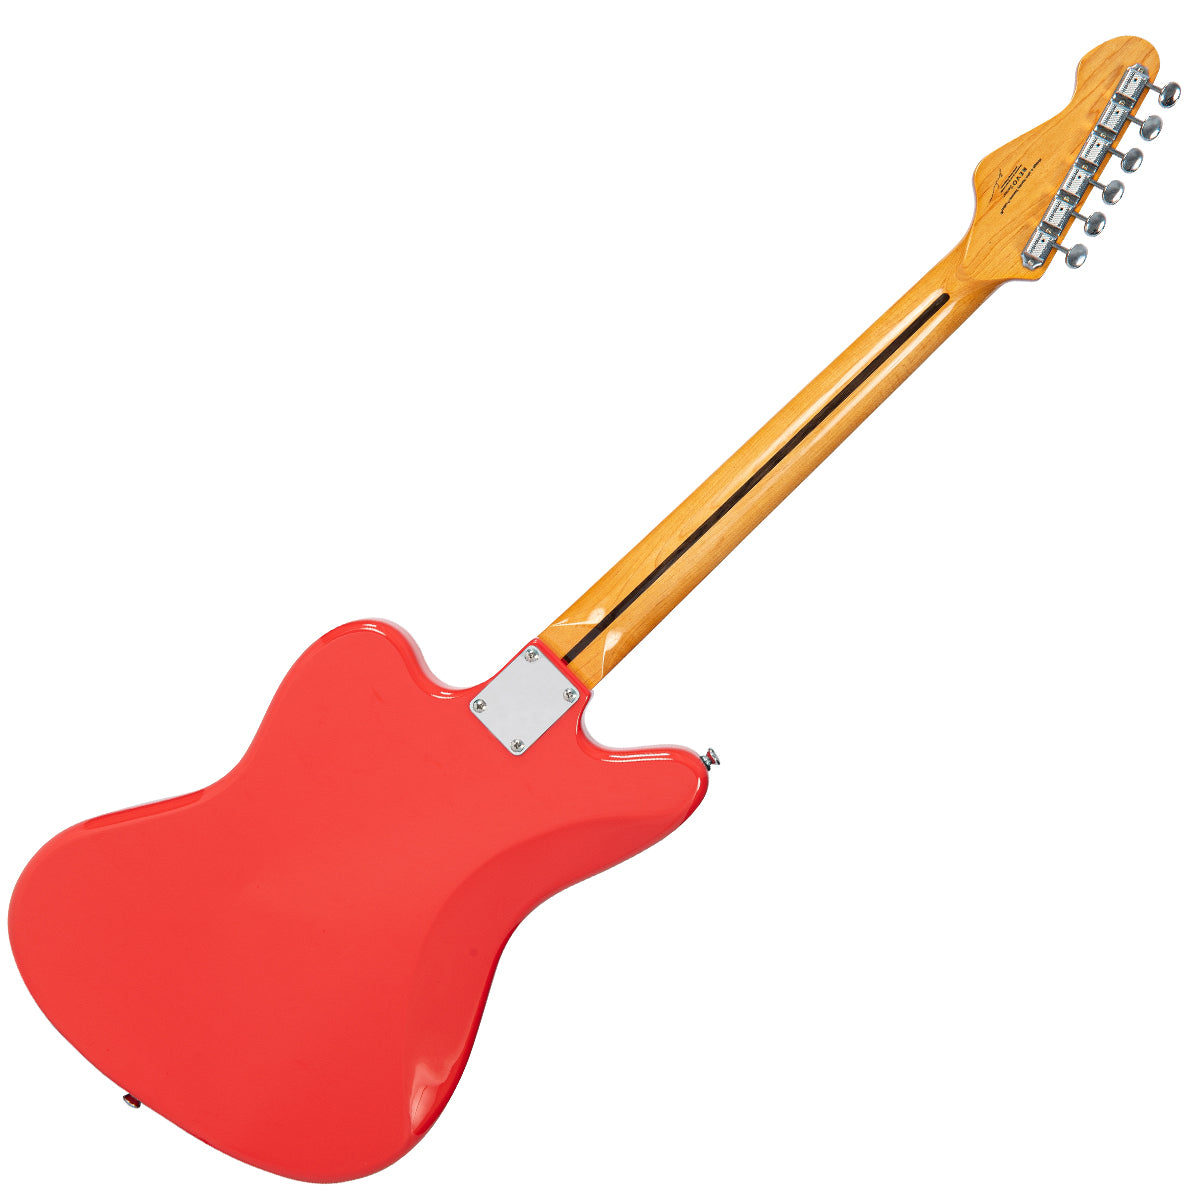 Vintage REVO Series 'Surfmaster 90' Guitar ~ Firenza Red, Electric Guitars for sale at Richards Guitars.